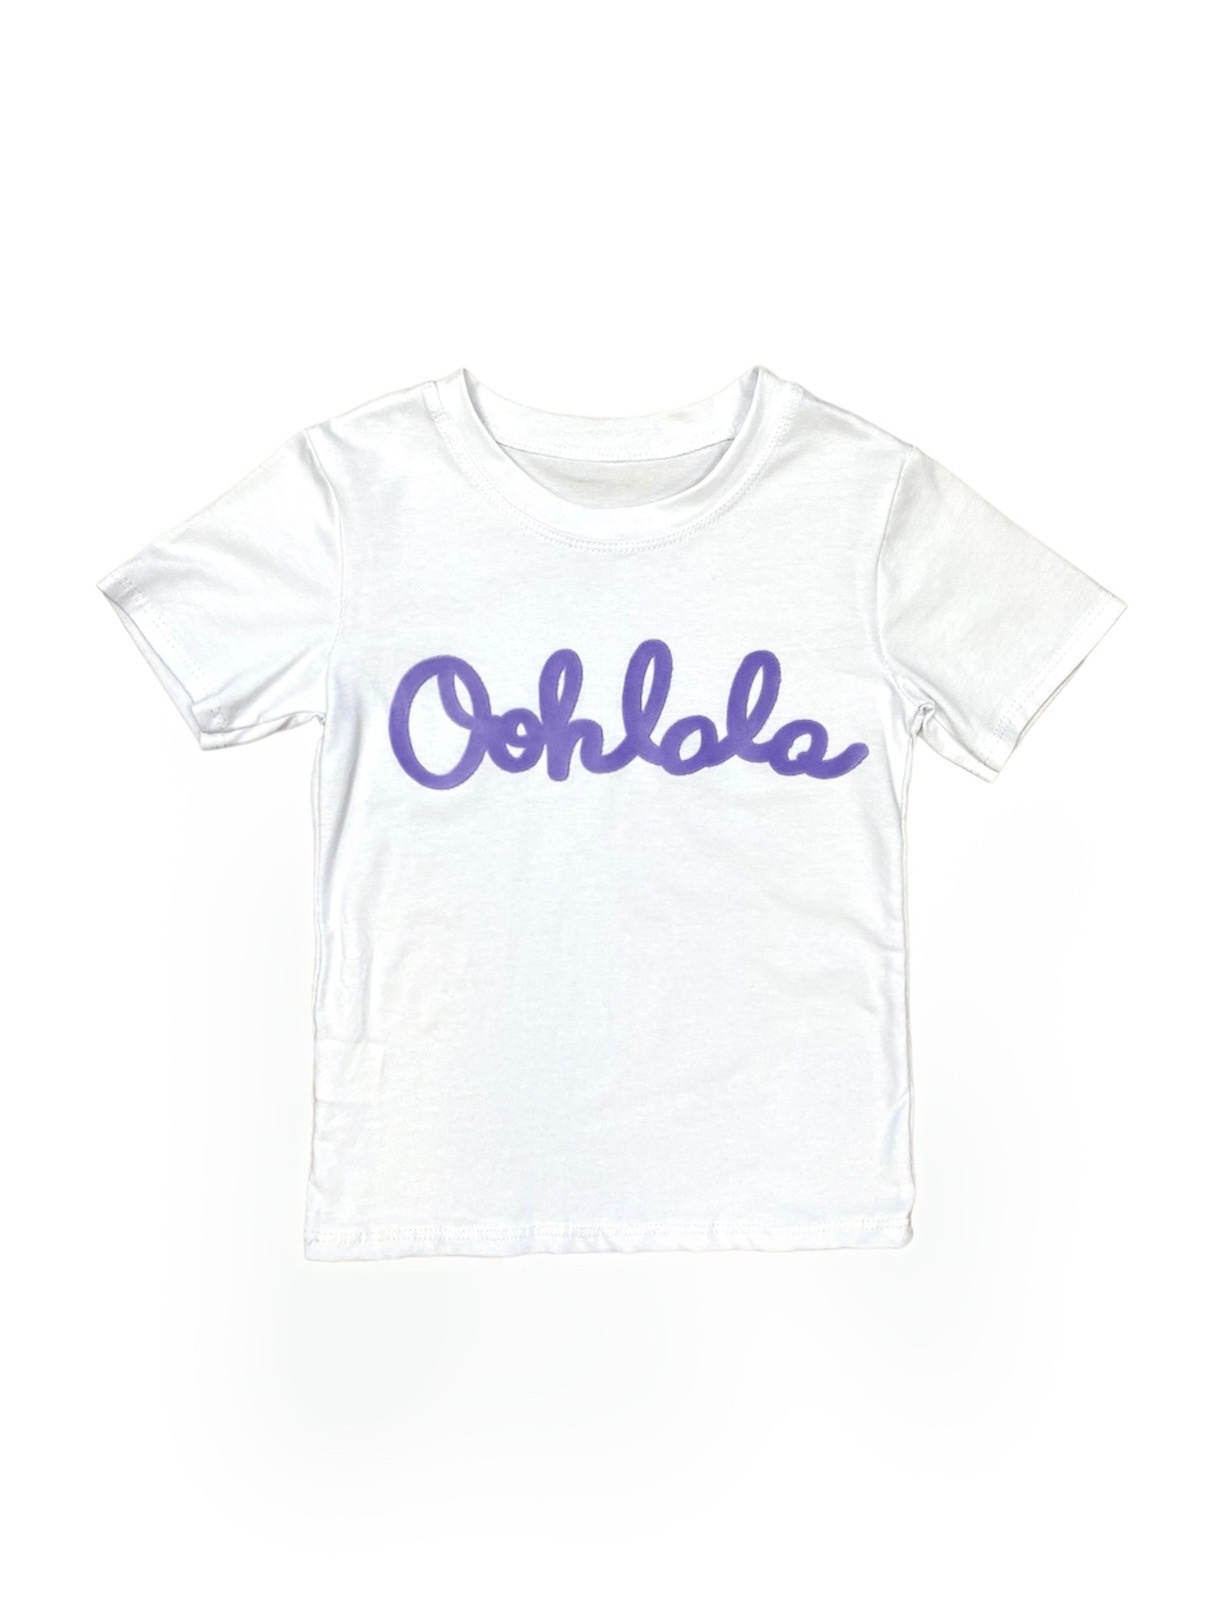 Oohlala T-shirt - White/Lila Isla Brasisa